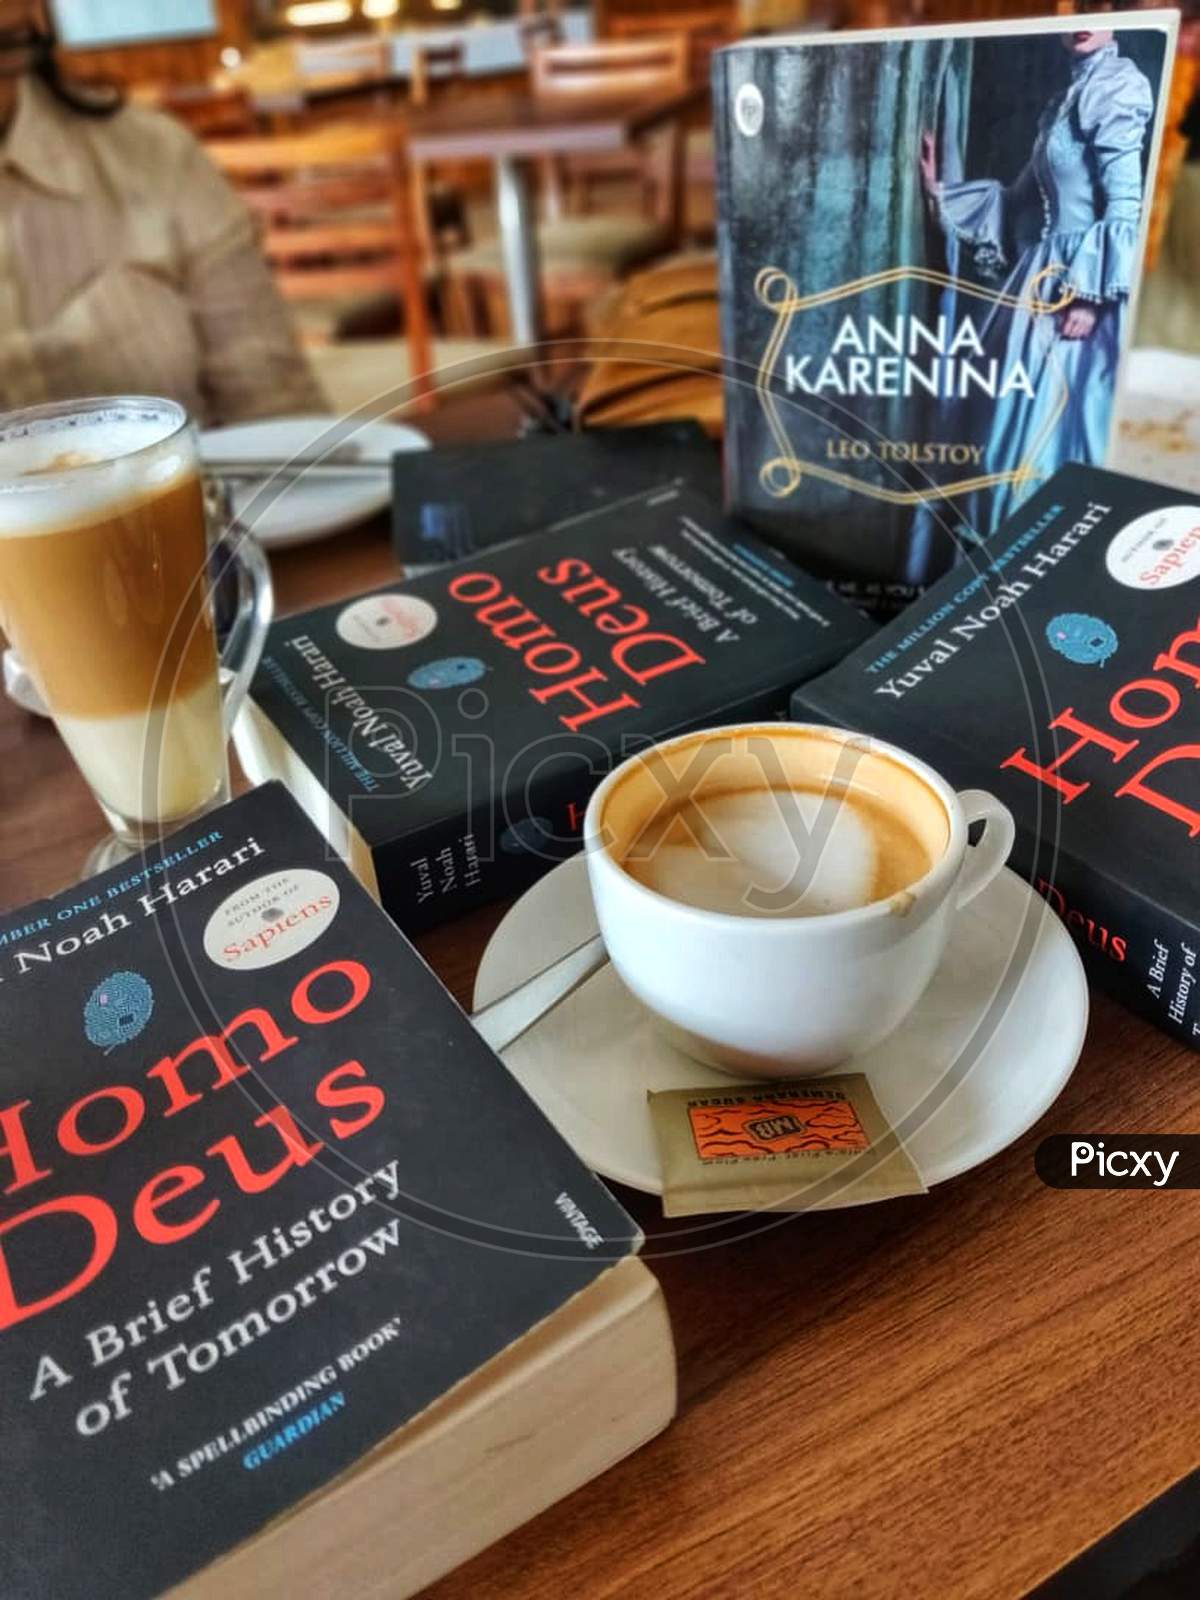 Coffee and books